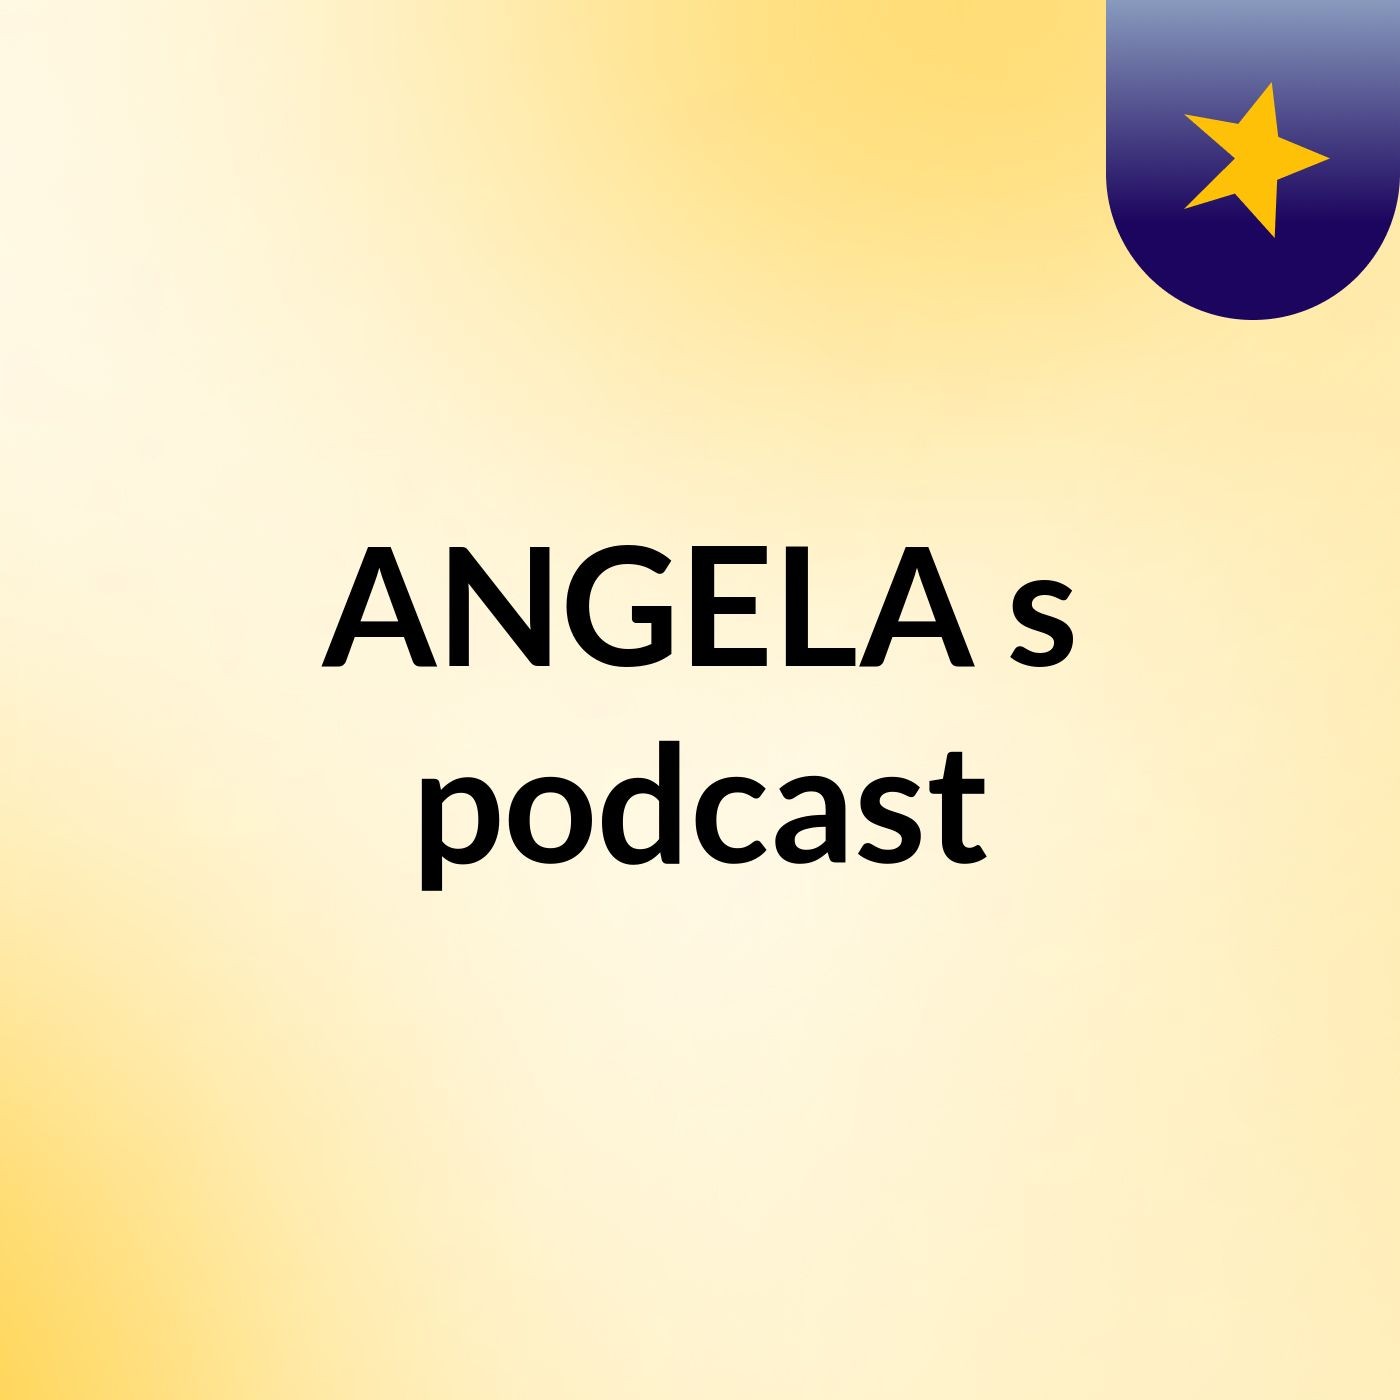 Episode 5 - ANGELA's podcast verse poetry